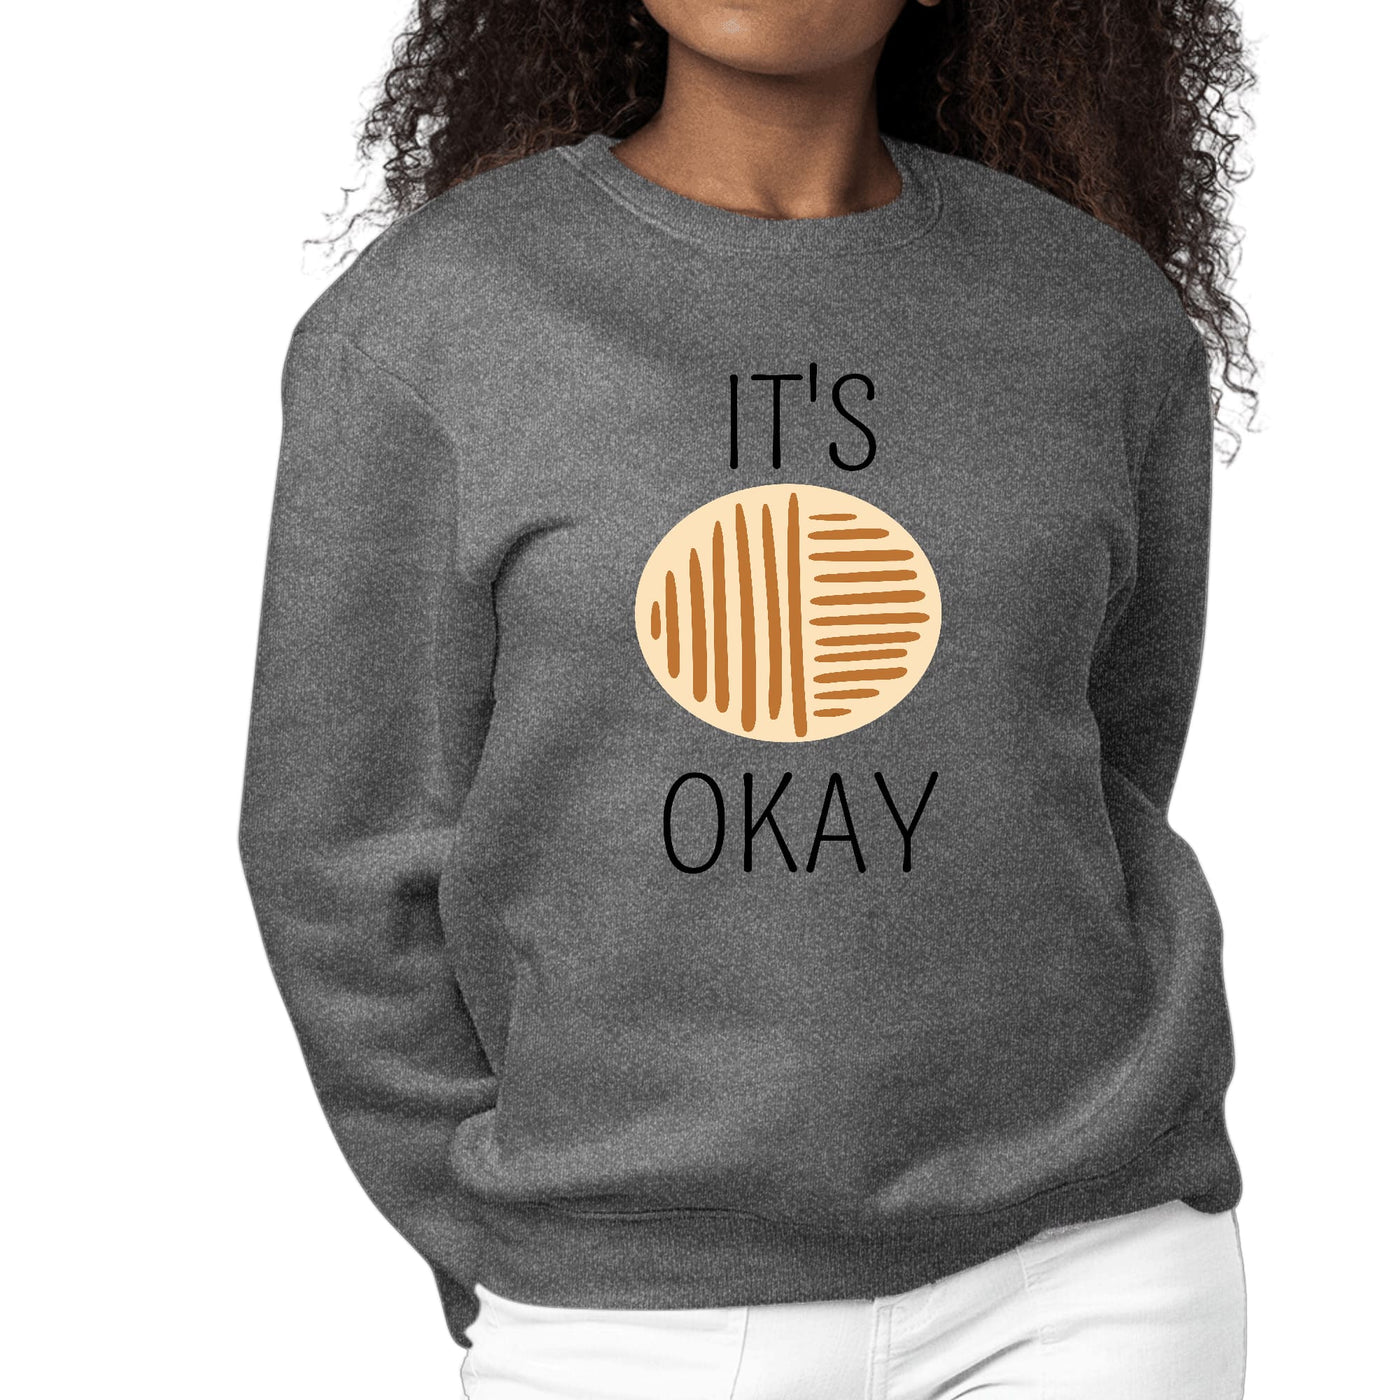 Womens Graphic Sweatshirt Say It Soul Its Okay Black And Brown Line - Womens